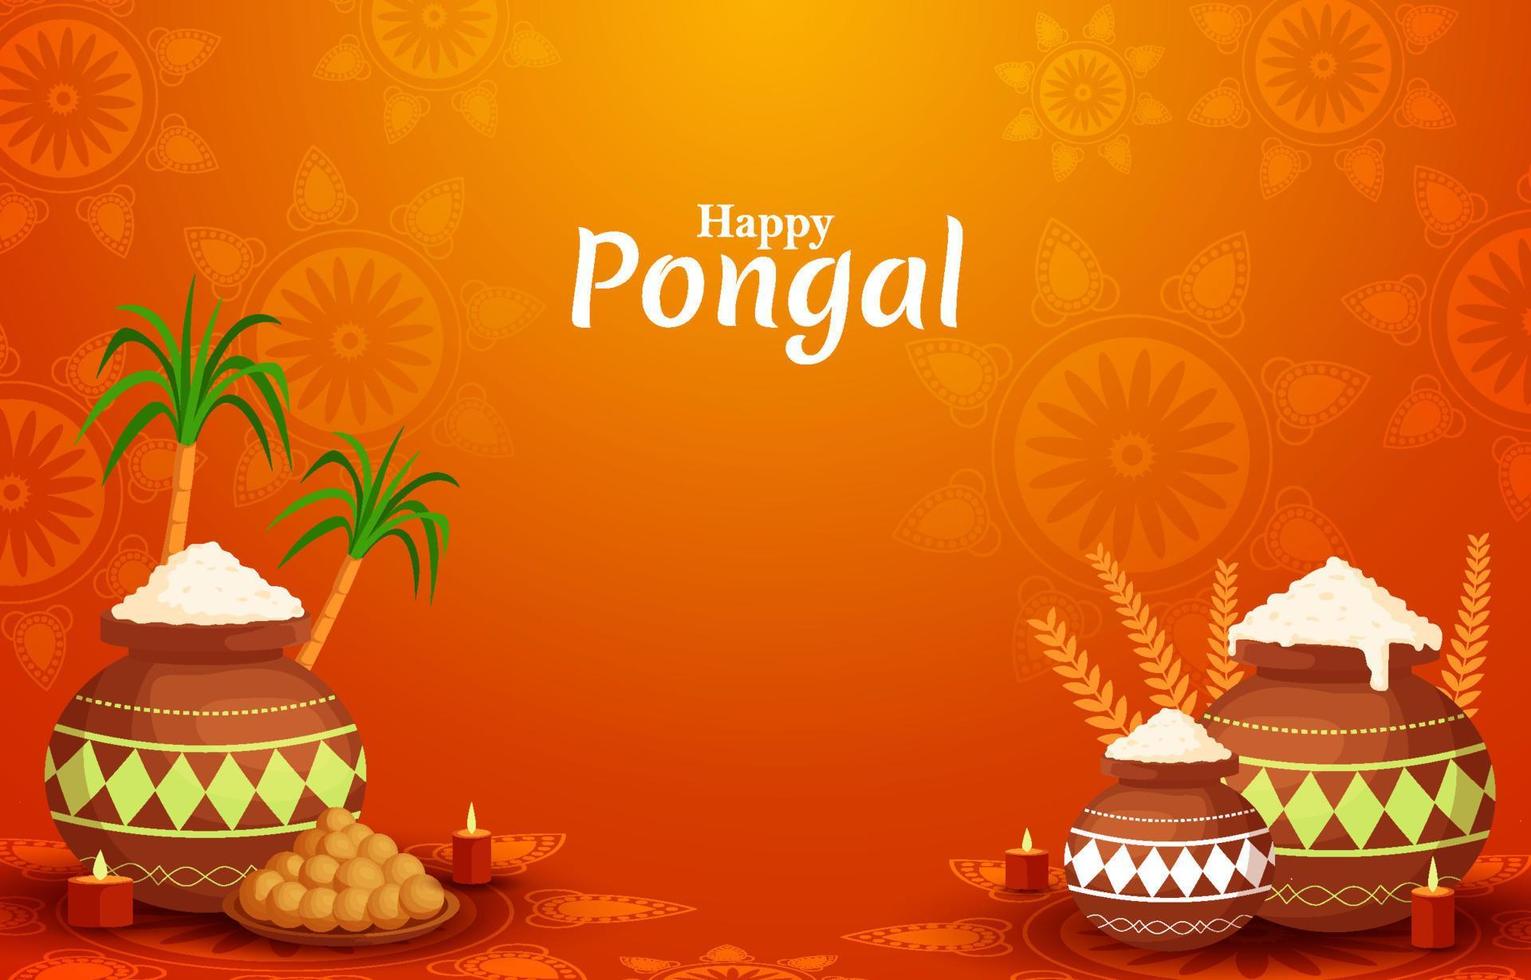 Happy Pongal Background vector